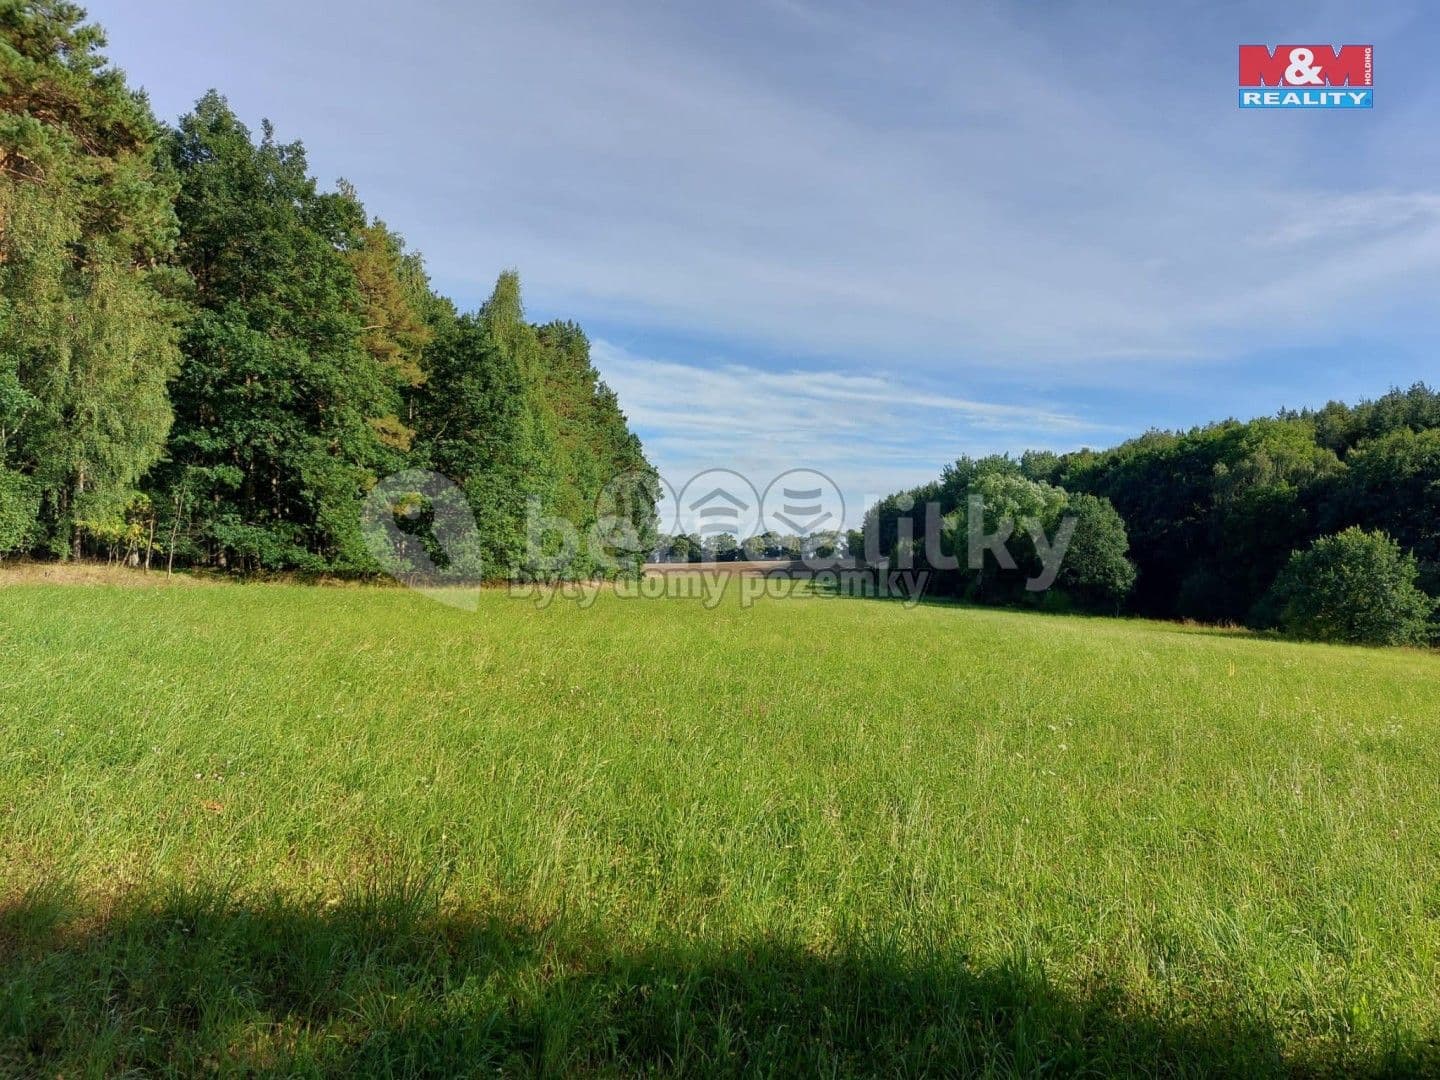 Prodej pozemku 4.924 m², Paceřice, Liberecký kraj